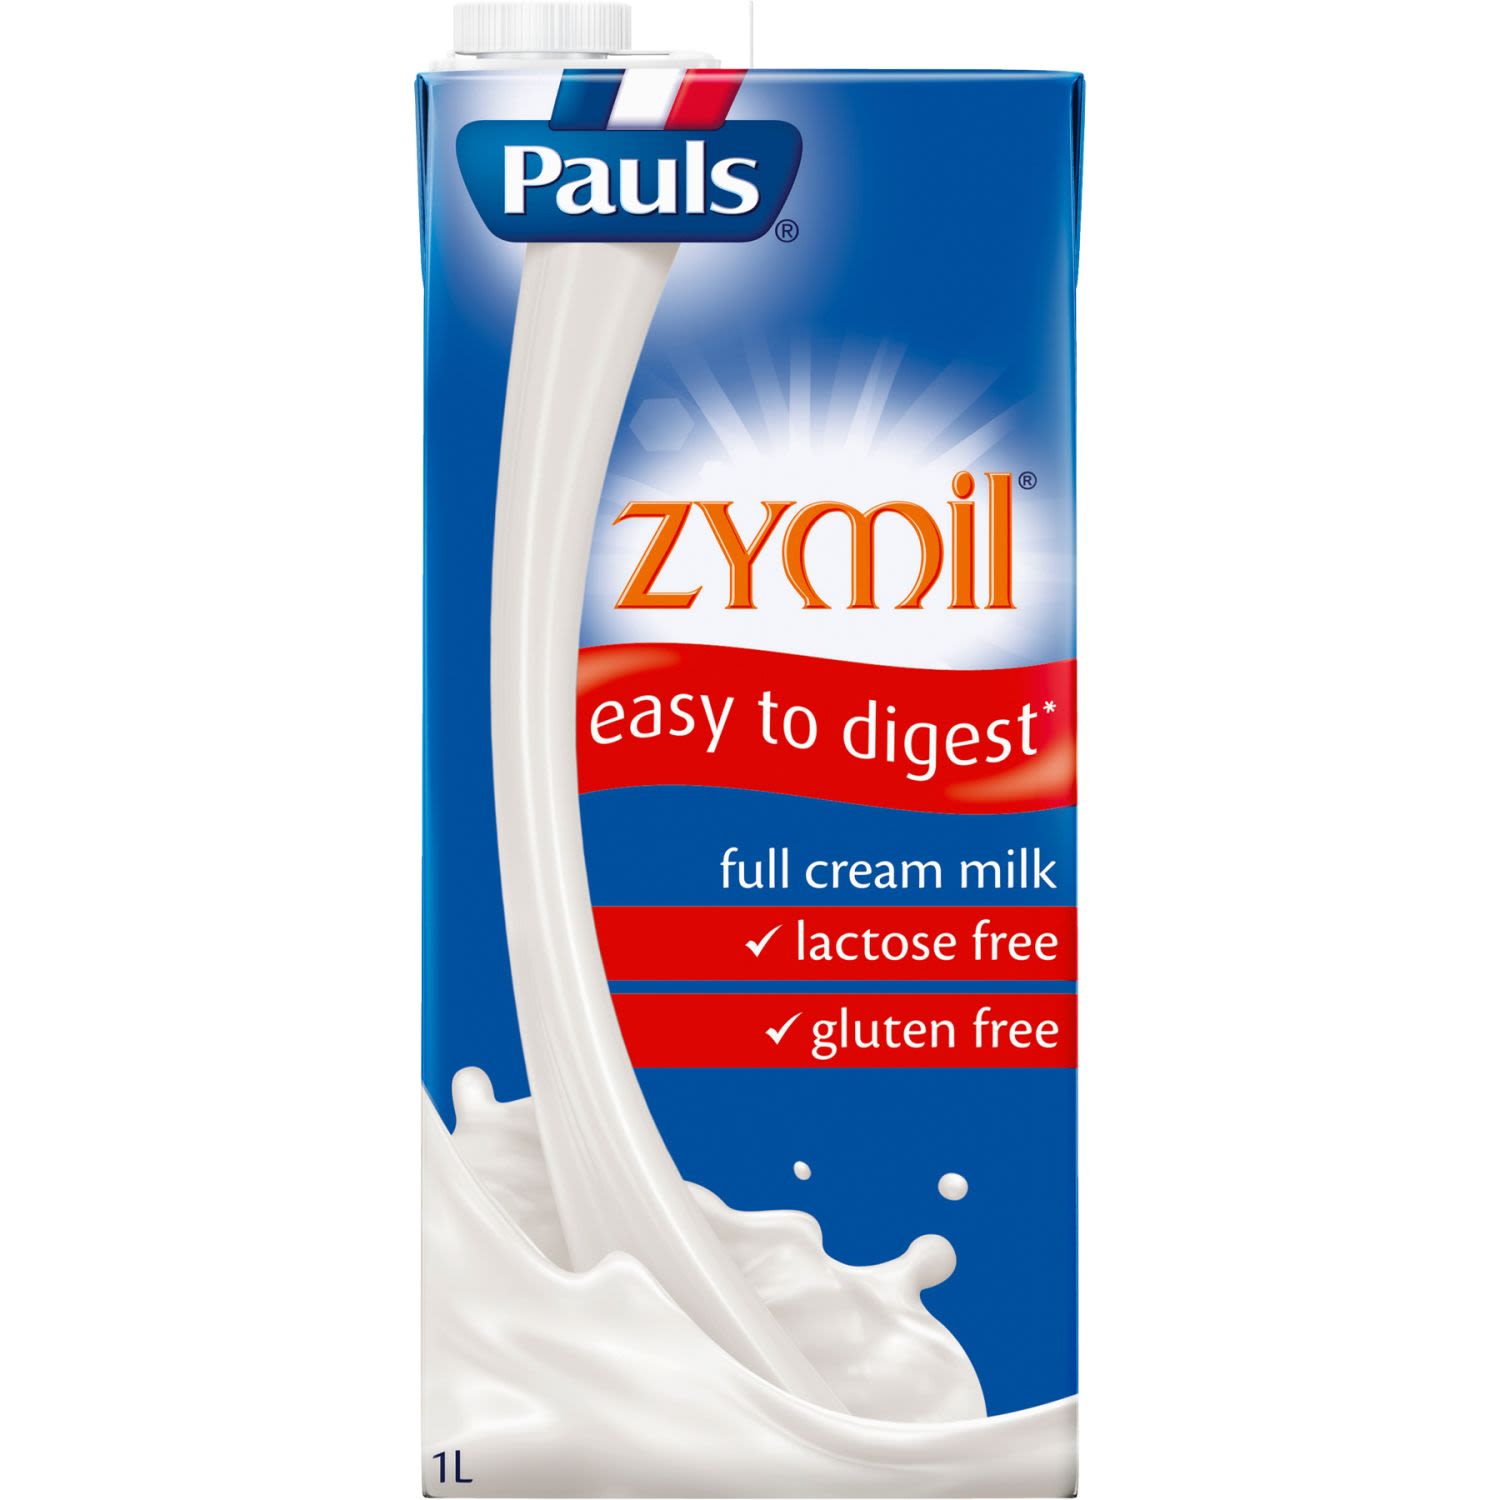 Pauls Zymil Full Cream Longlife Milk, 1 Litre